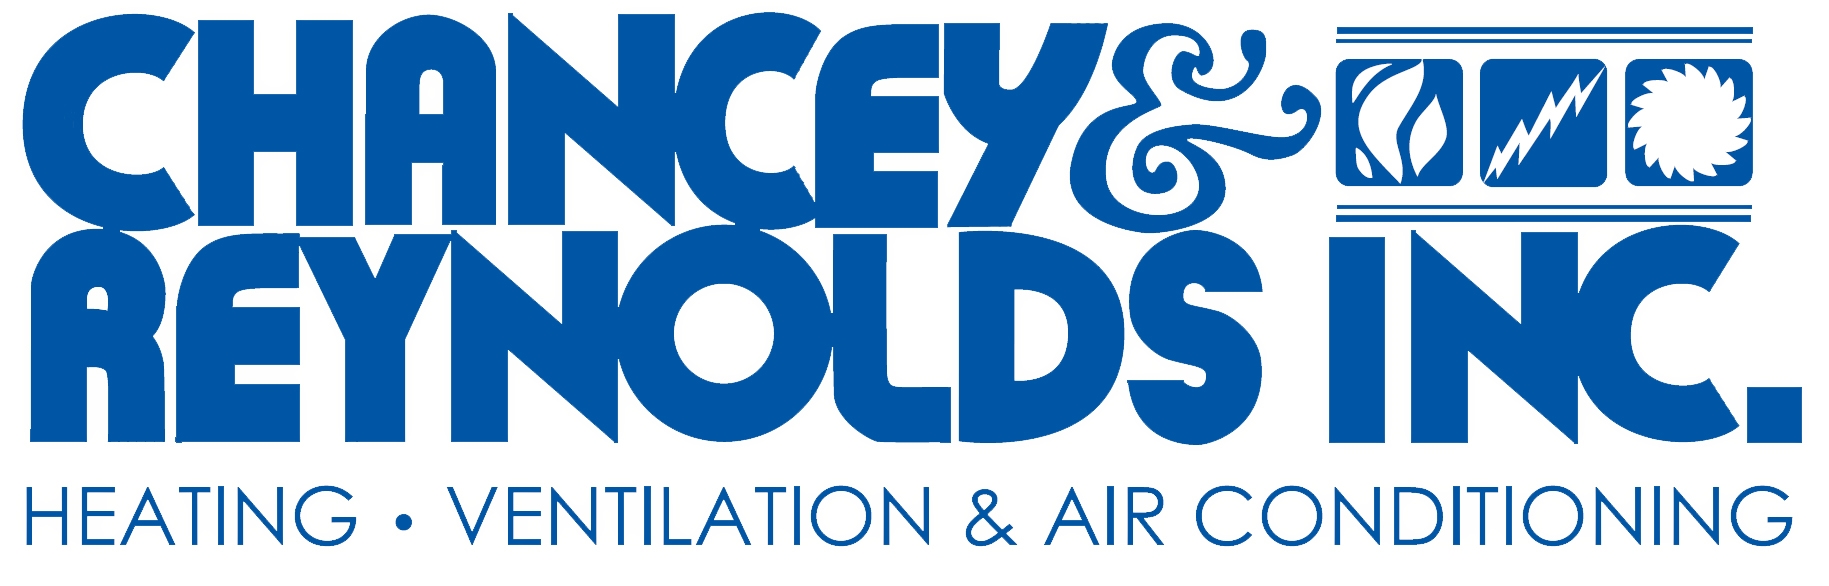 Chancey and Reynolds INC. logo